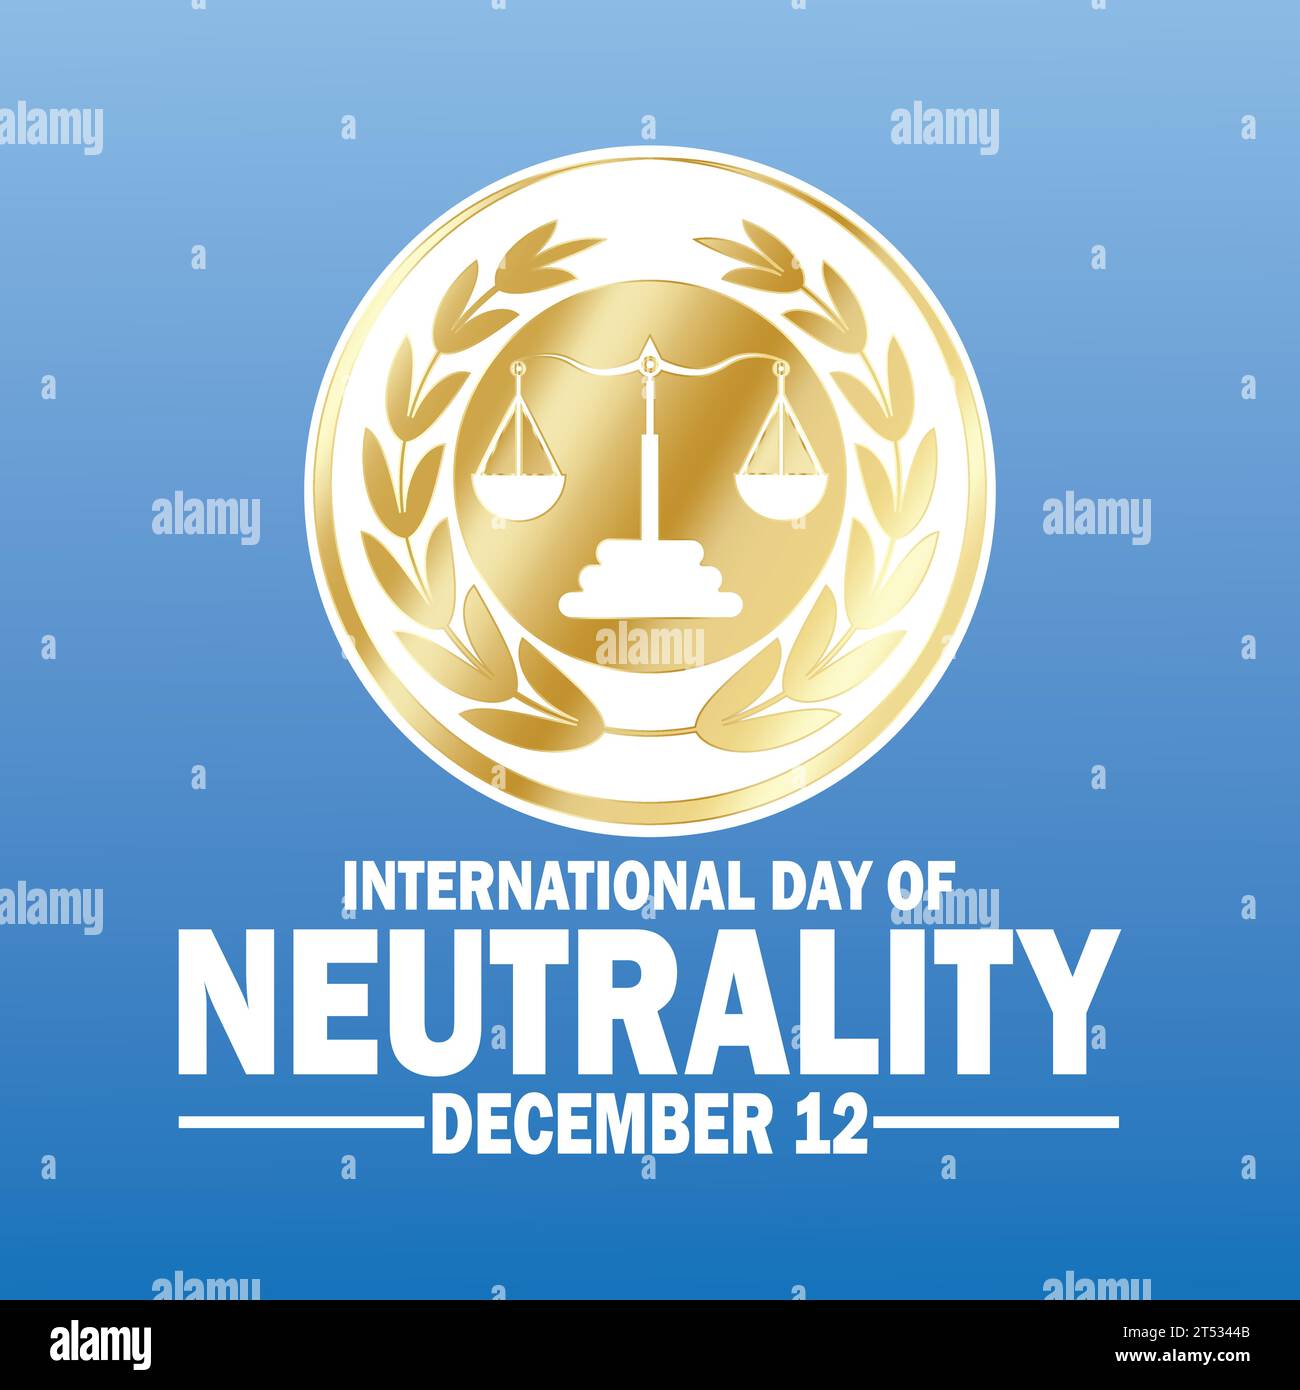 International Day Of Neutrality Vector illustration. December 12. Design template for banner, poster, flyer. Stock Vector